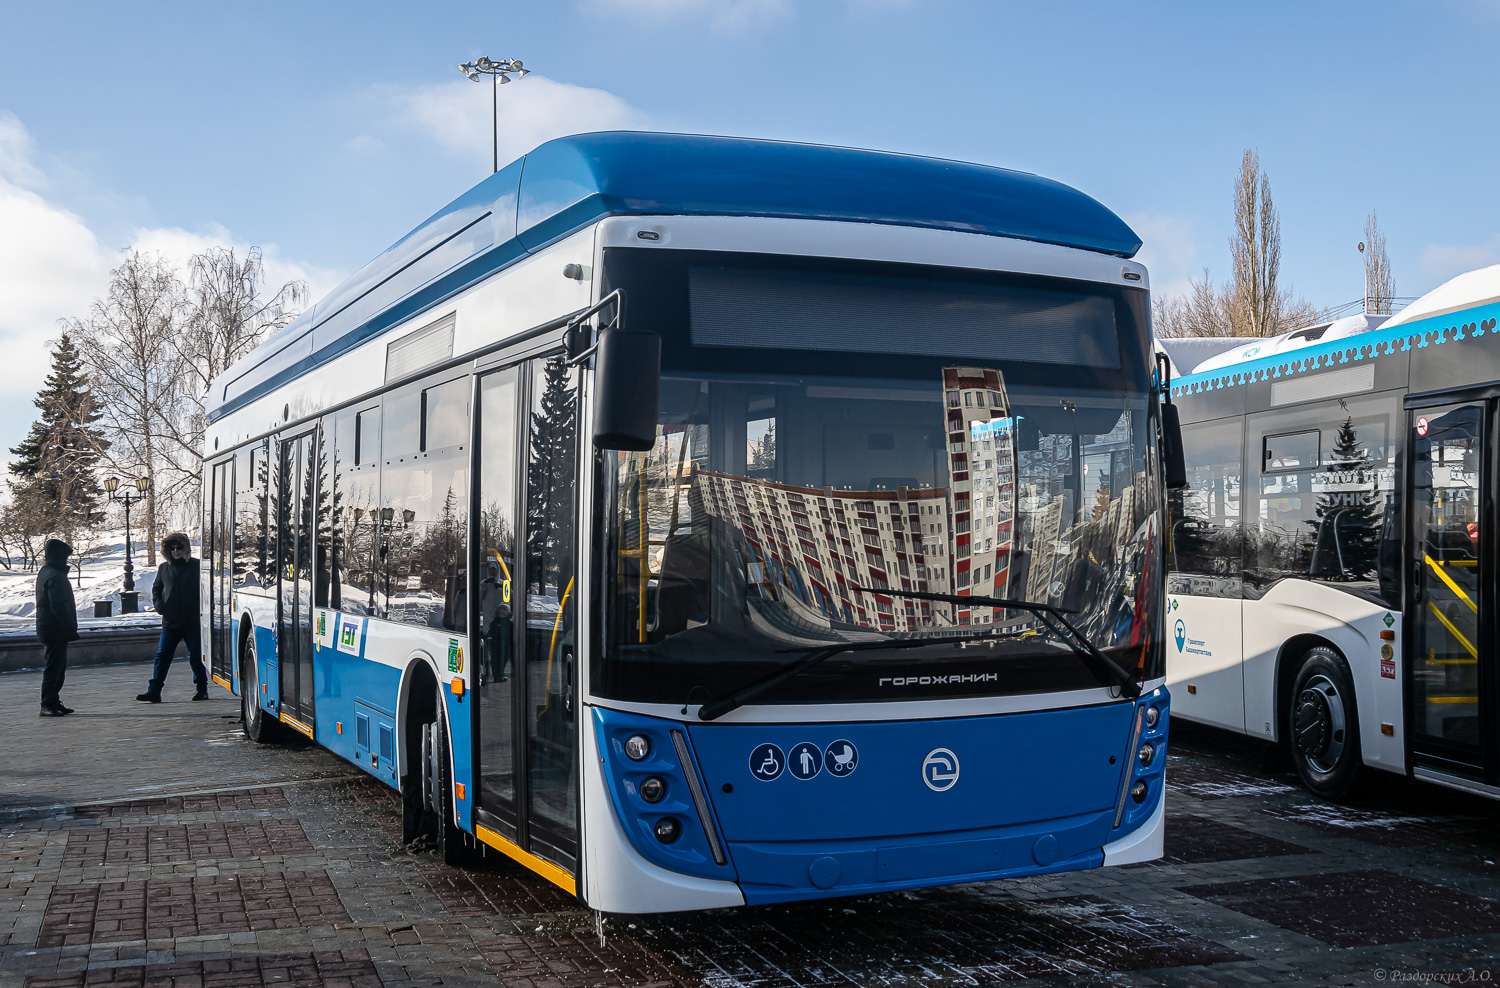 Oufa — New BTZ trolleybuses; Novossibirsk — New trolleybuses